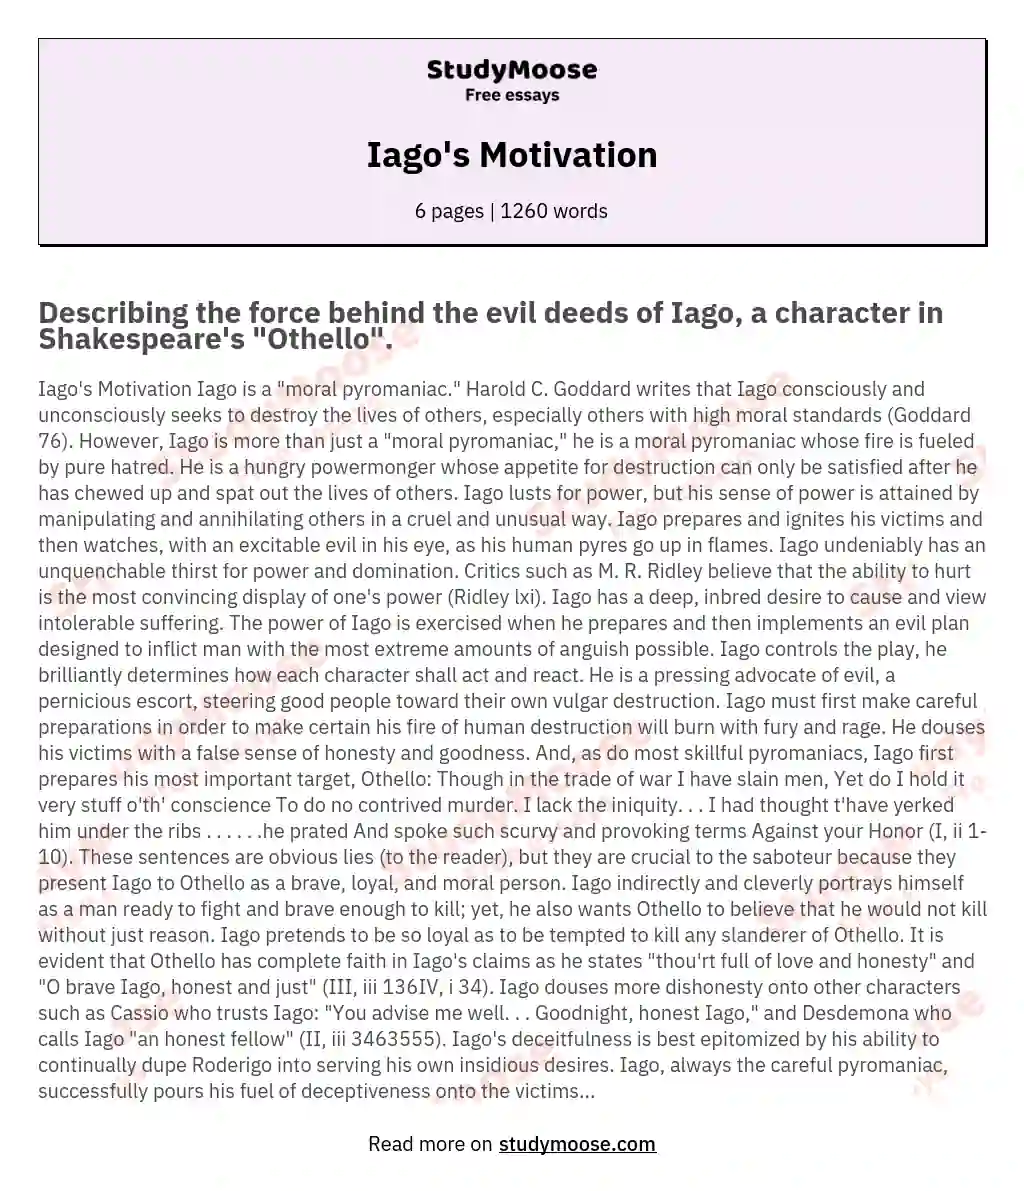 Iago's Motivation essay